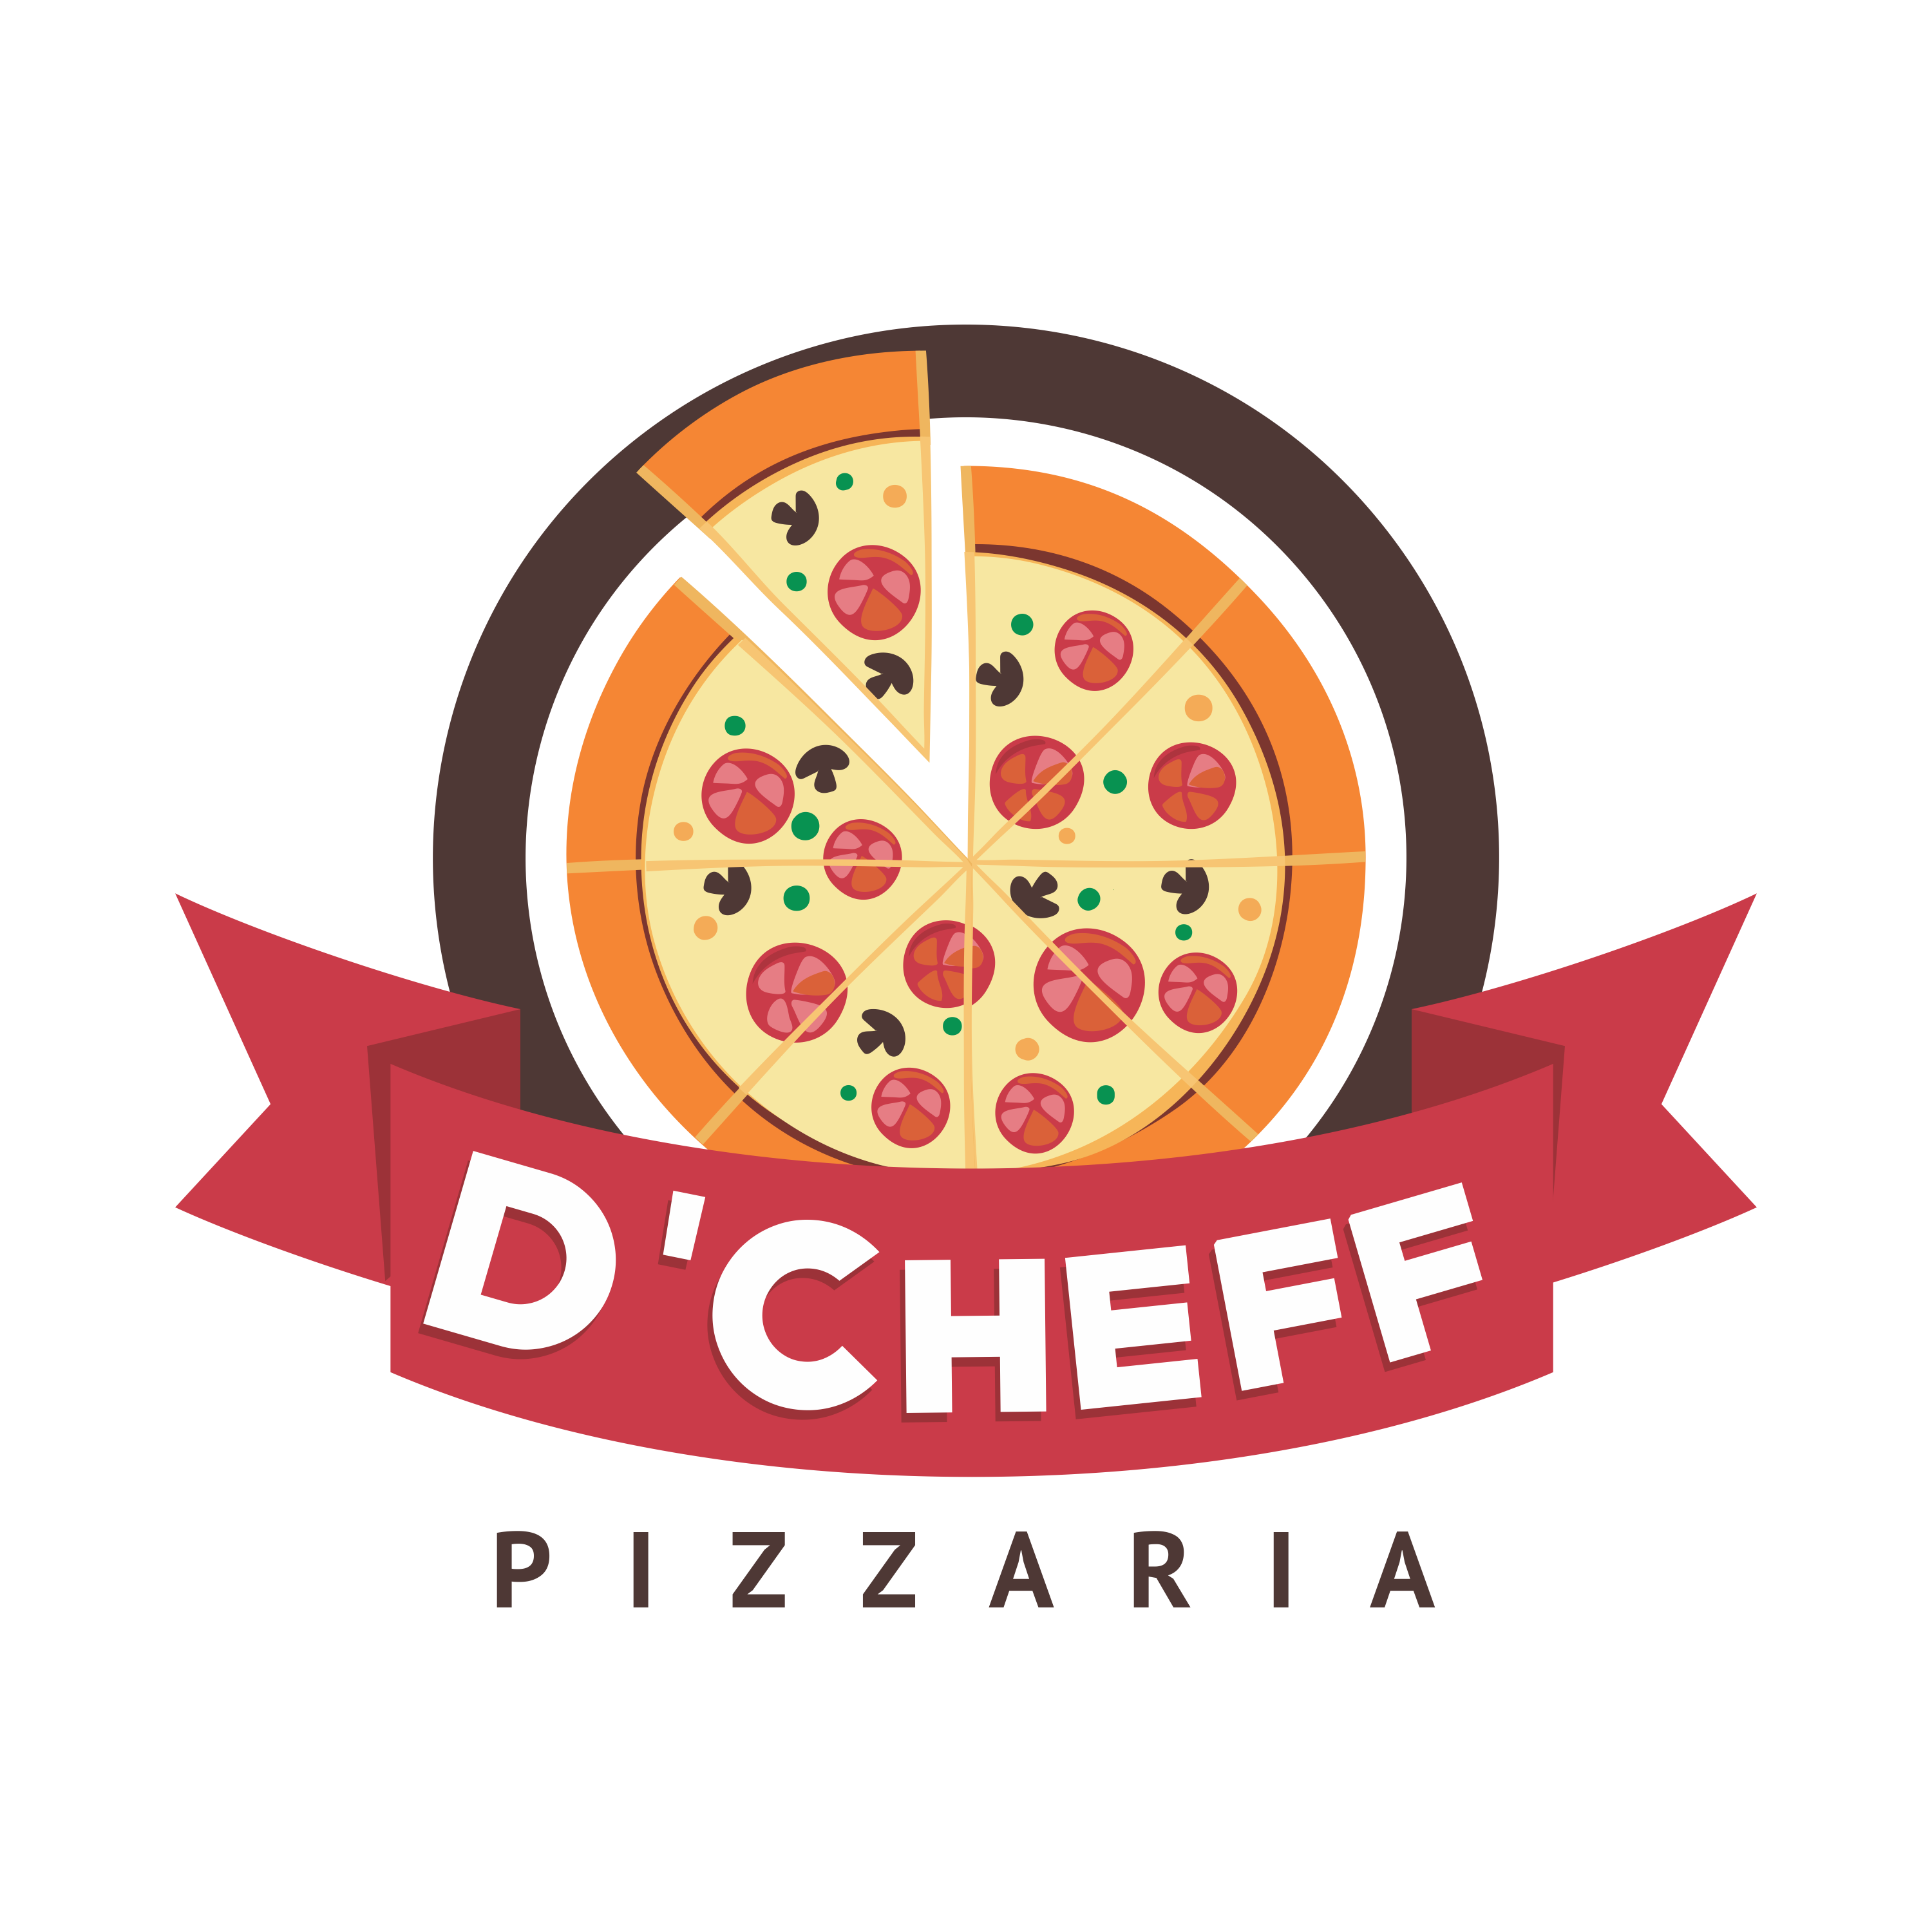 Pizzaria D’Cheff